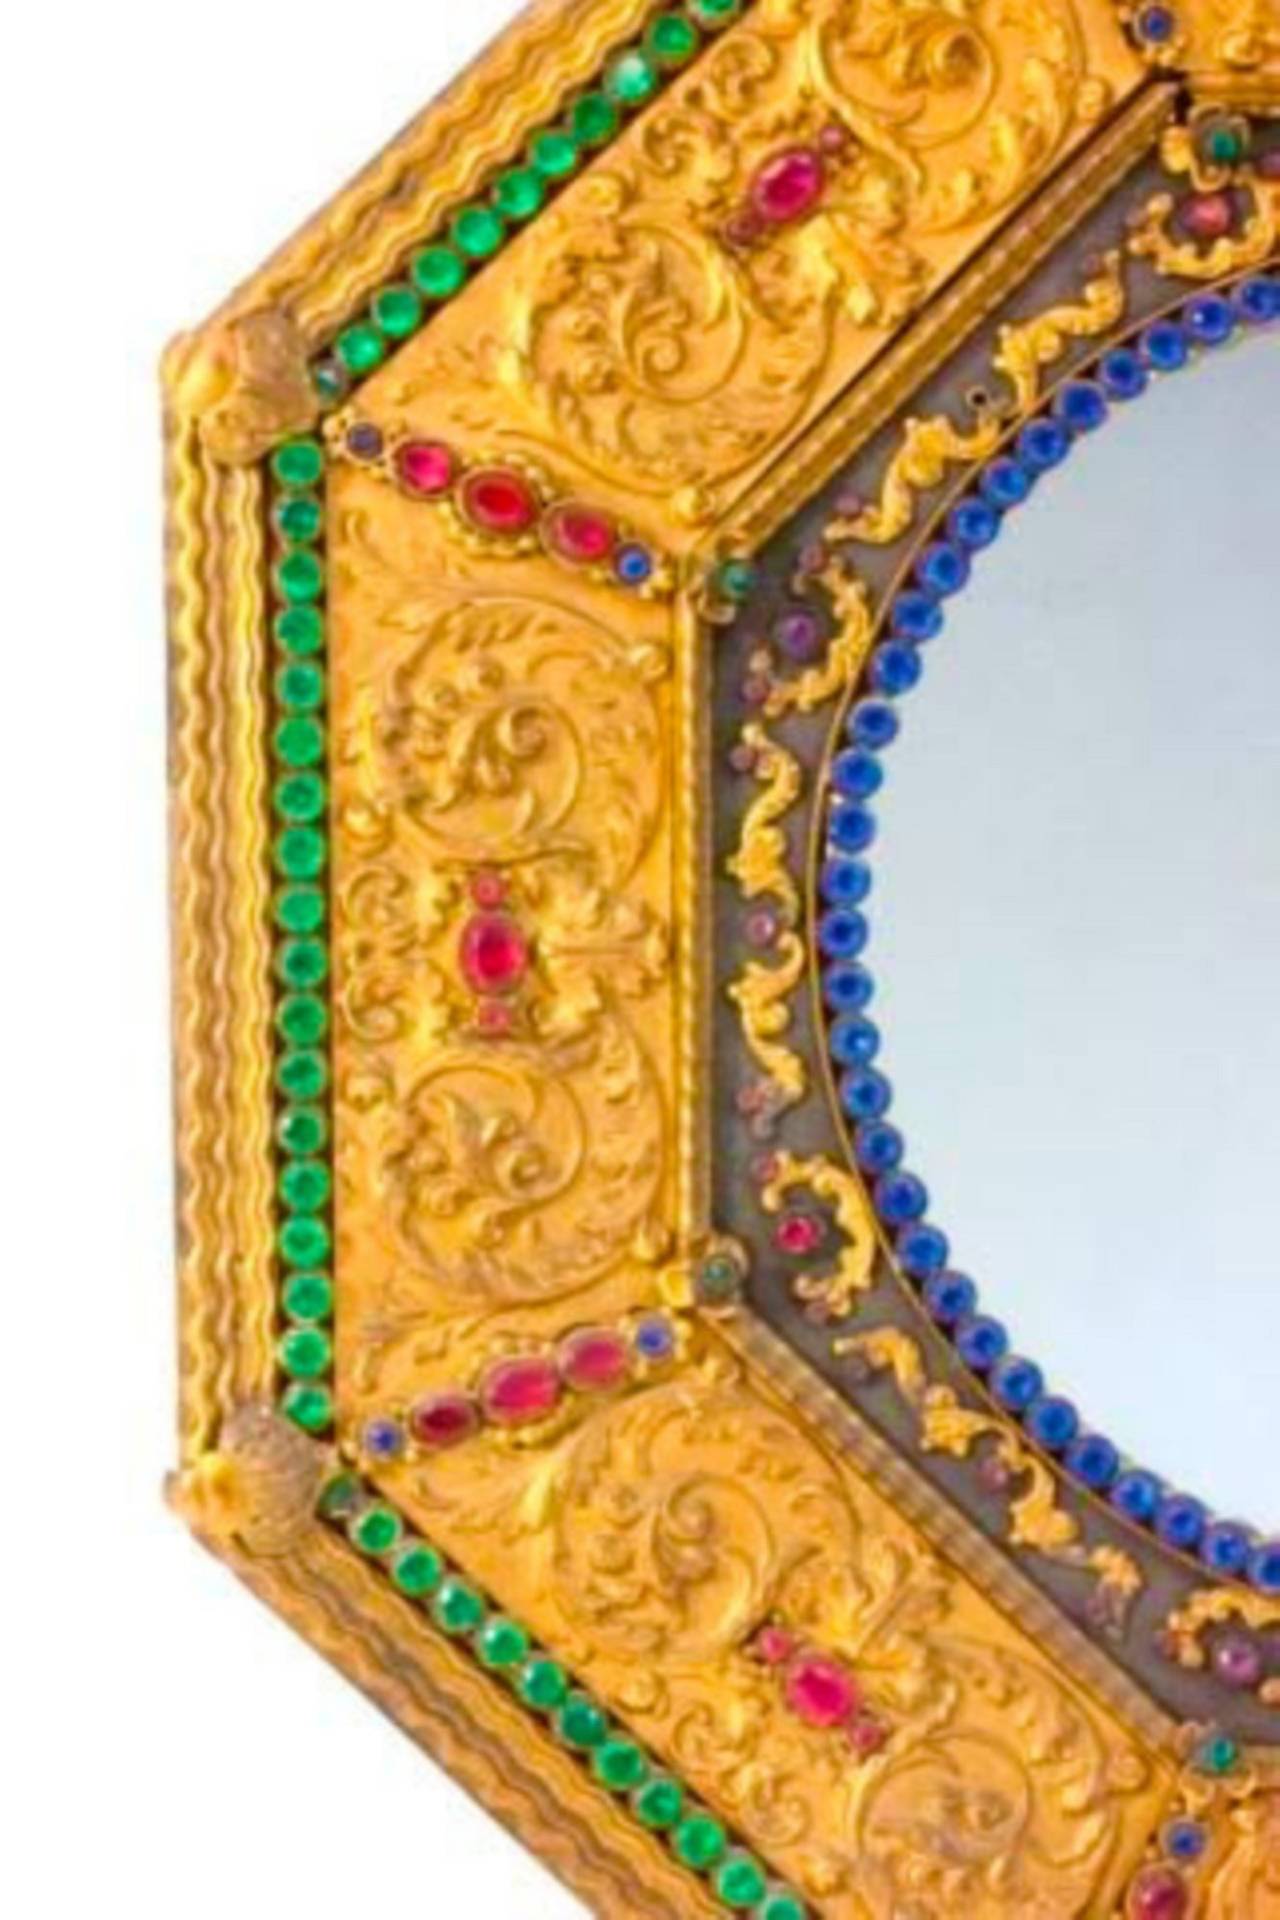 European Early Renaissance Revival Octagonal Jeweled Mirror